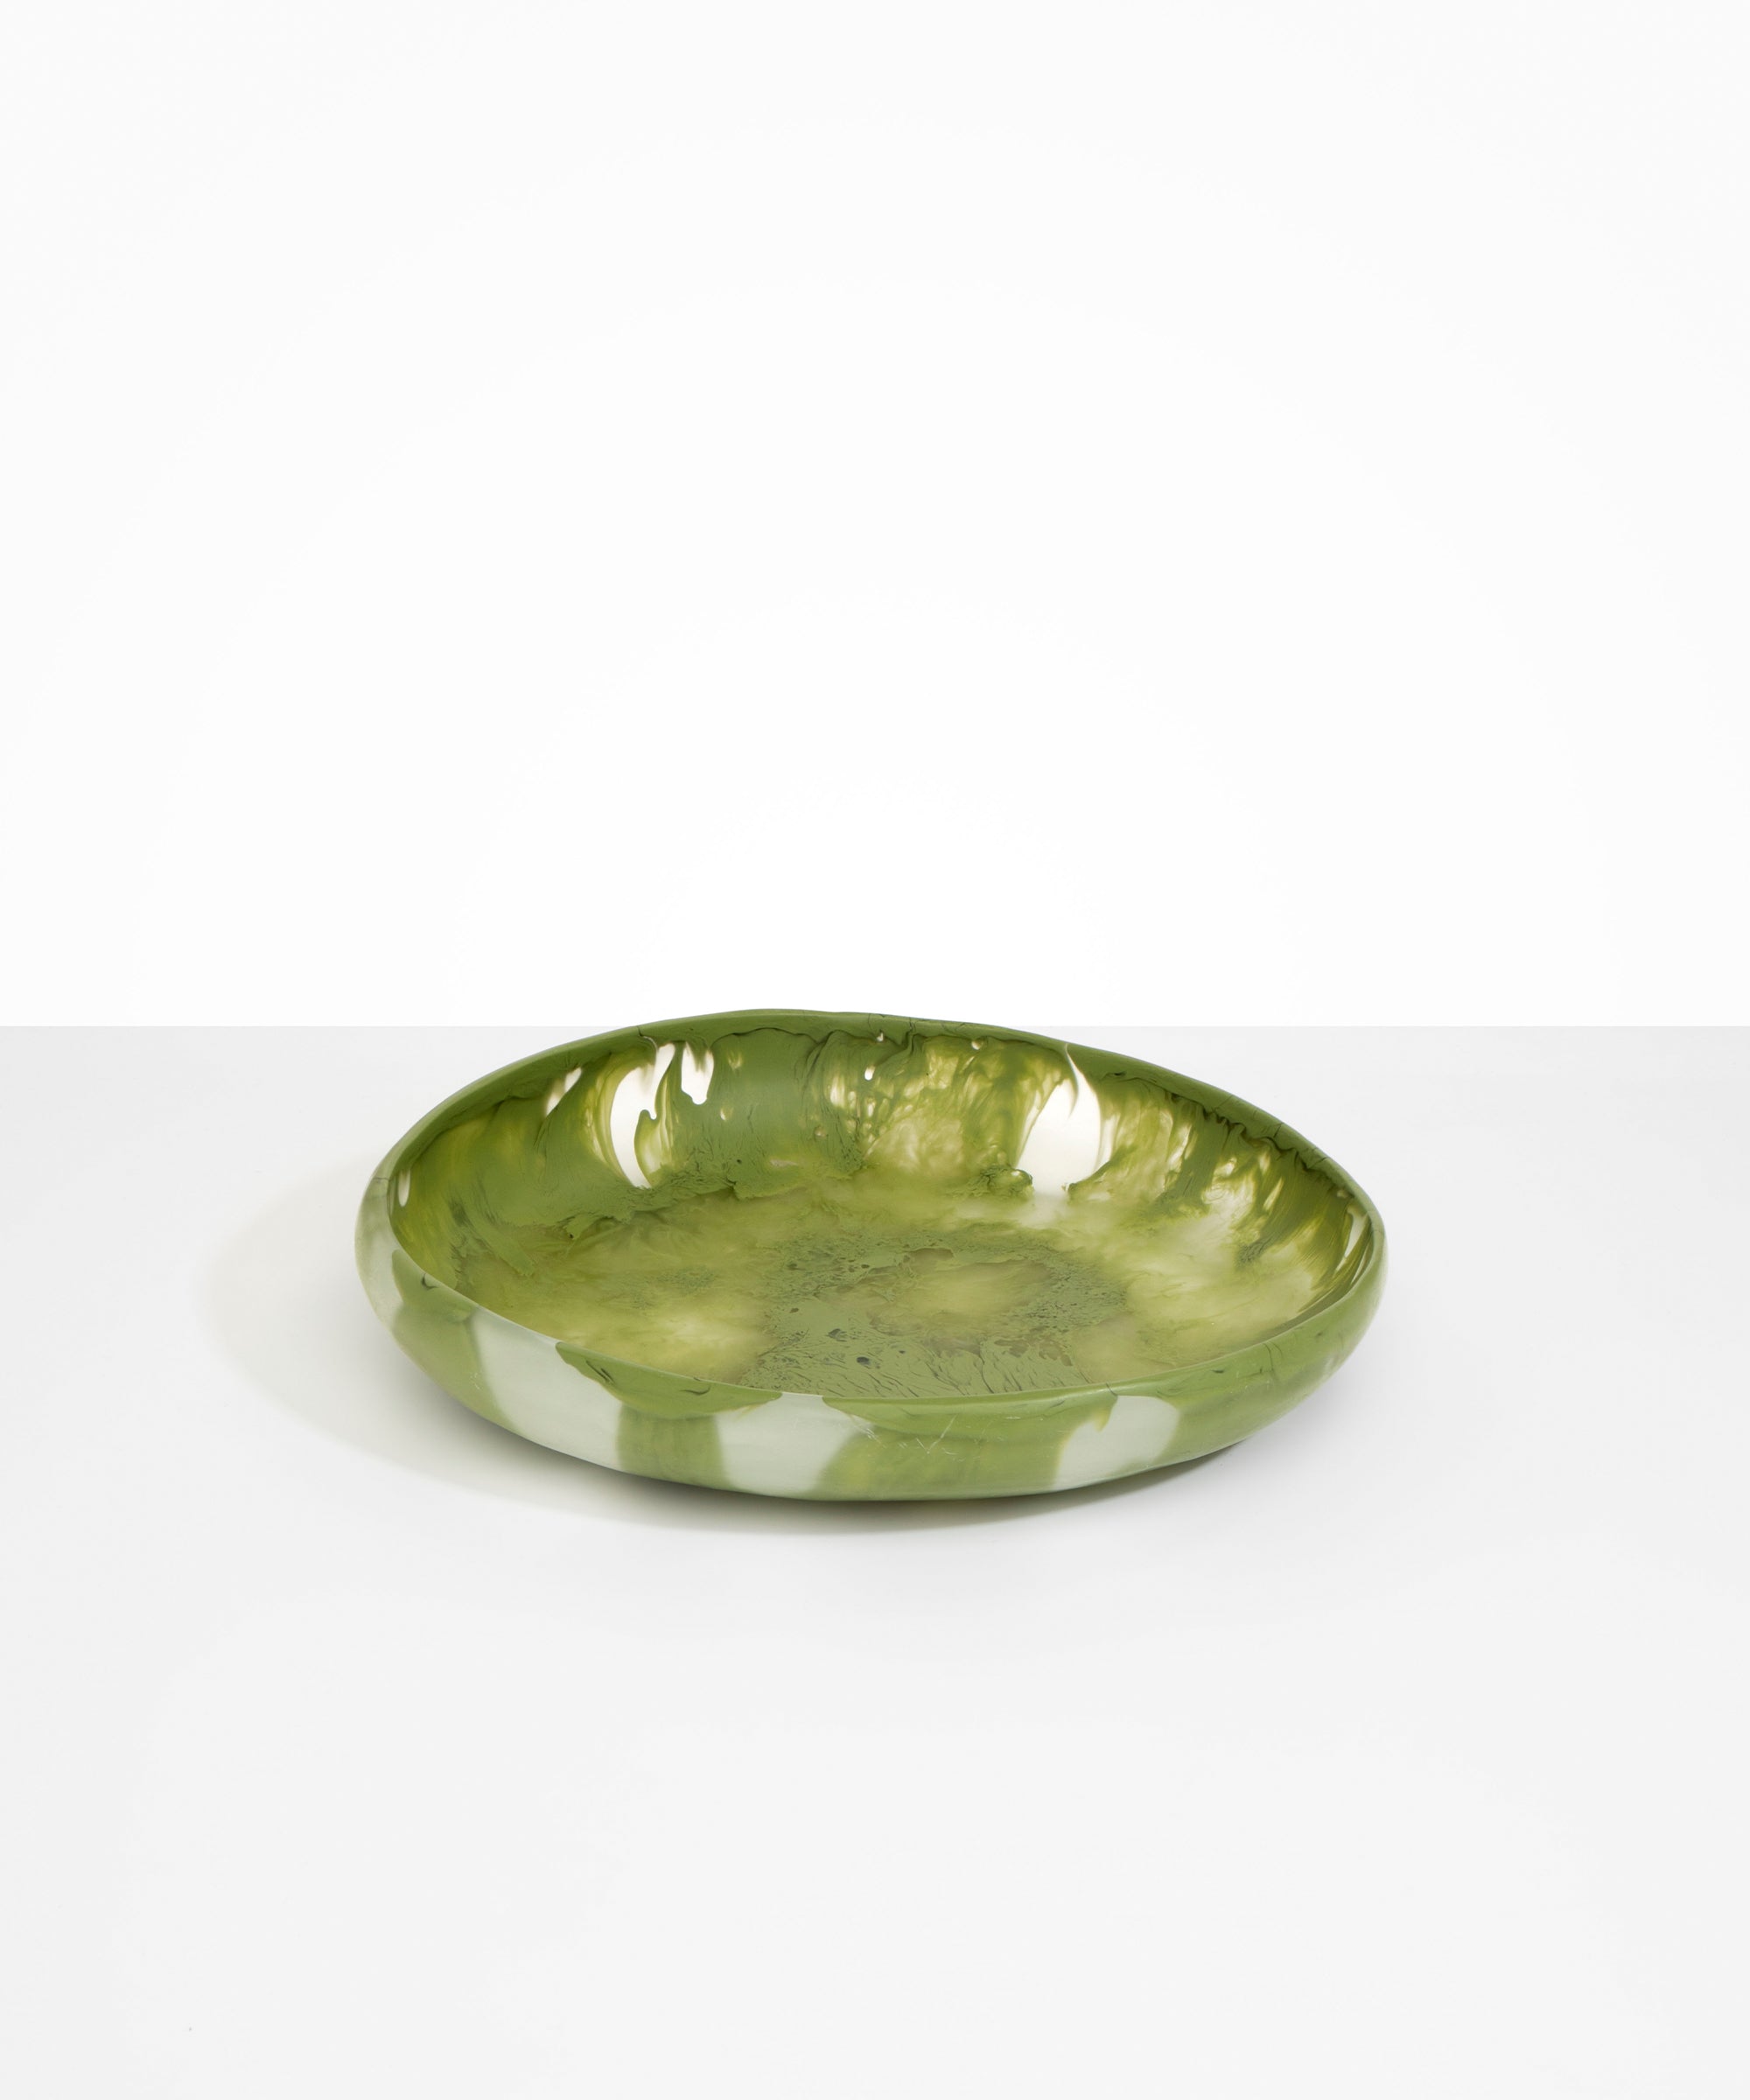 Dinosaur Designs Large Earth Bowl Bowls in Olive color resin